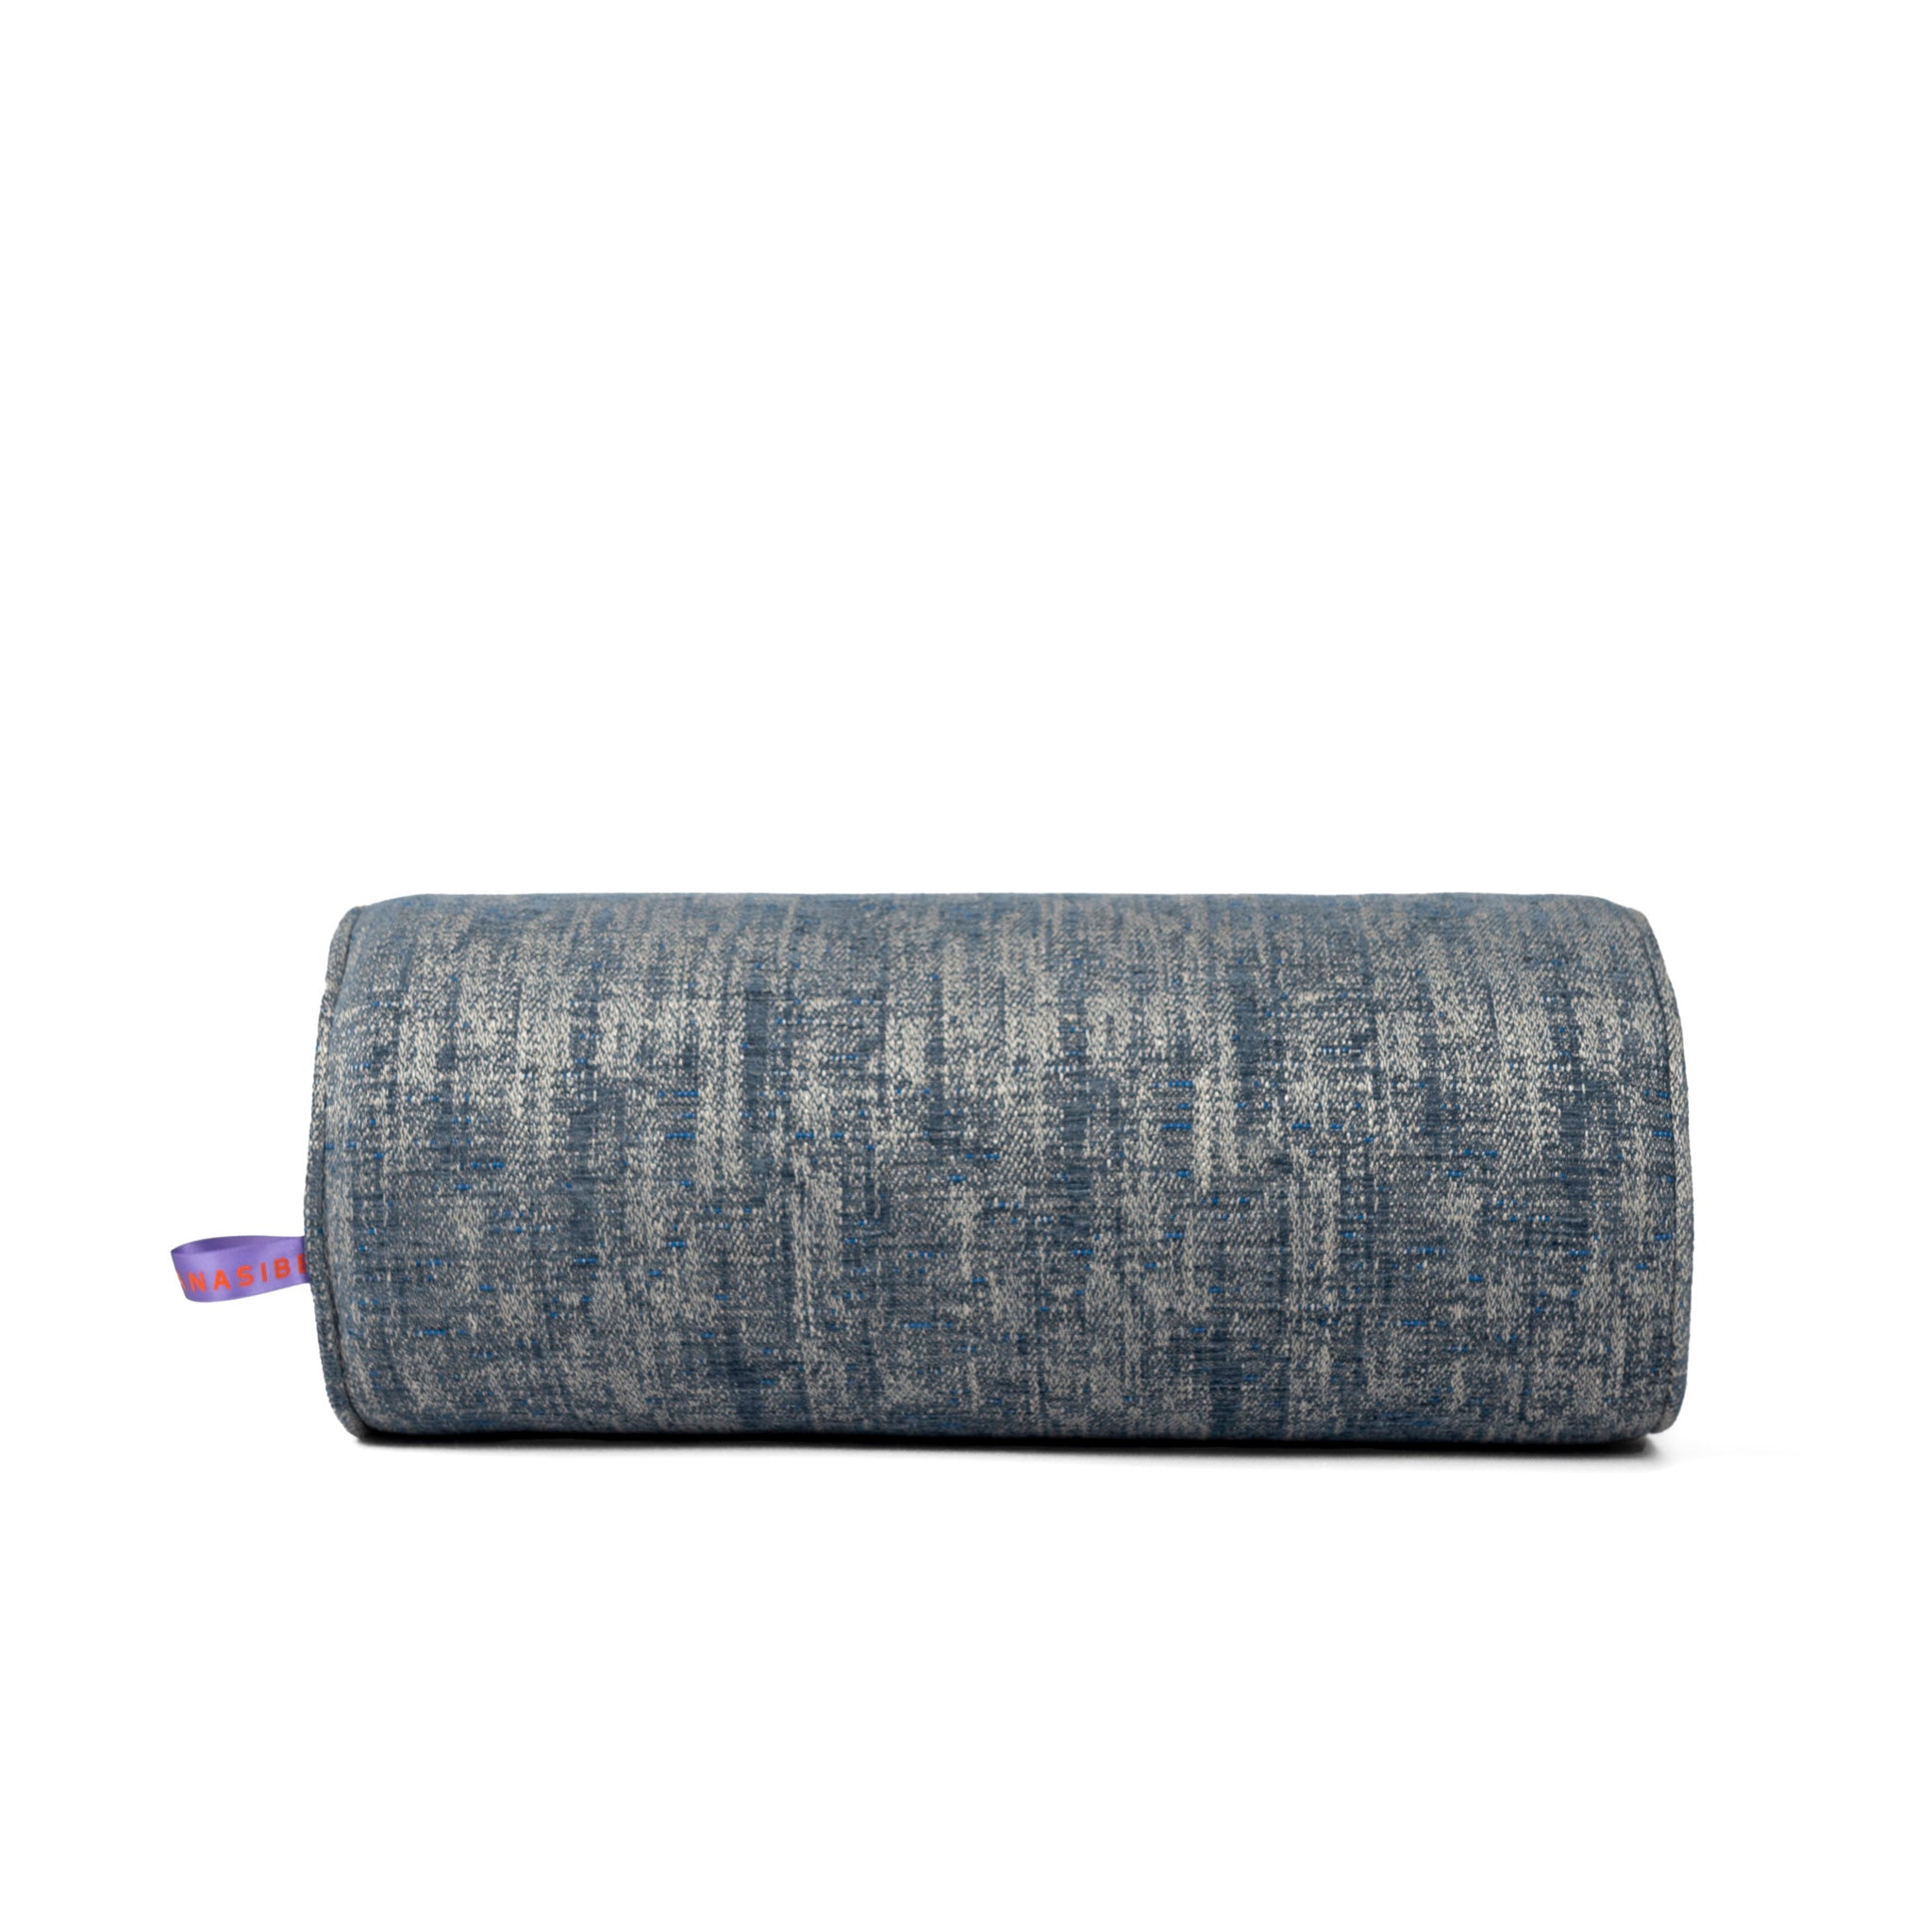 Fabric roll cushion with blue inserts ART B77